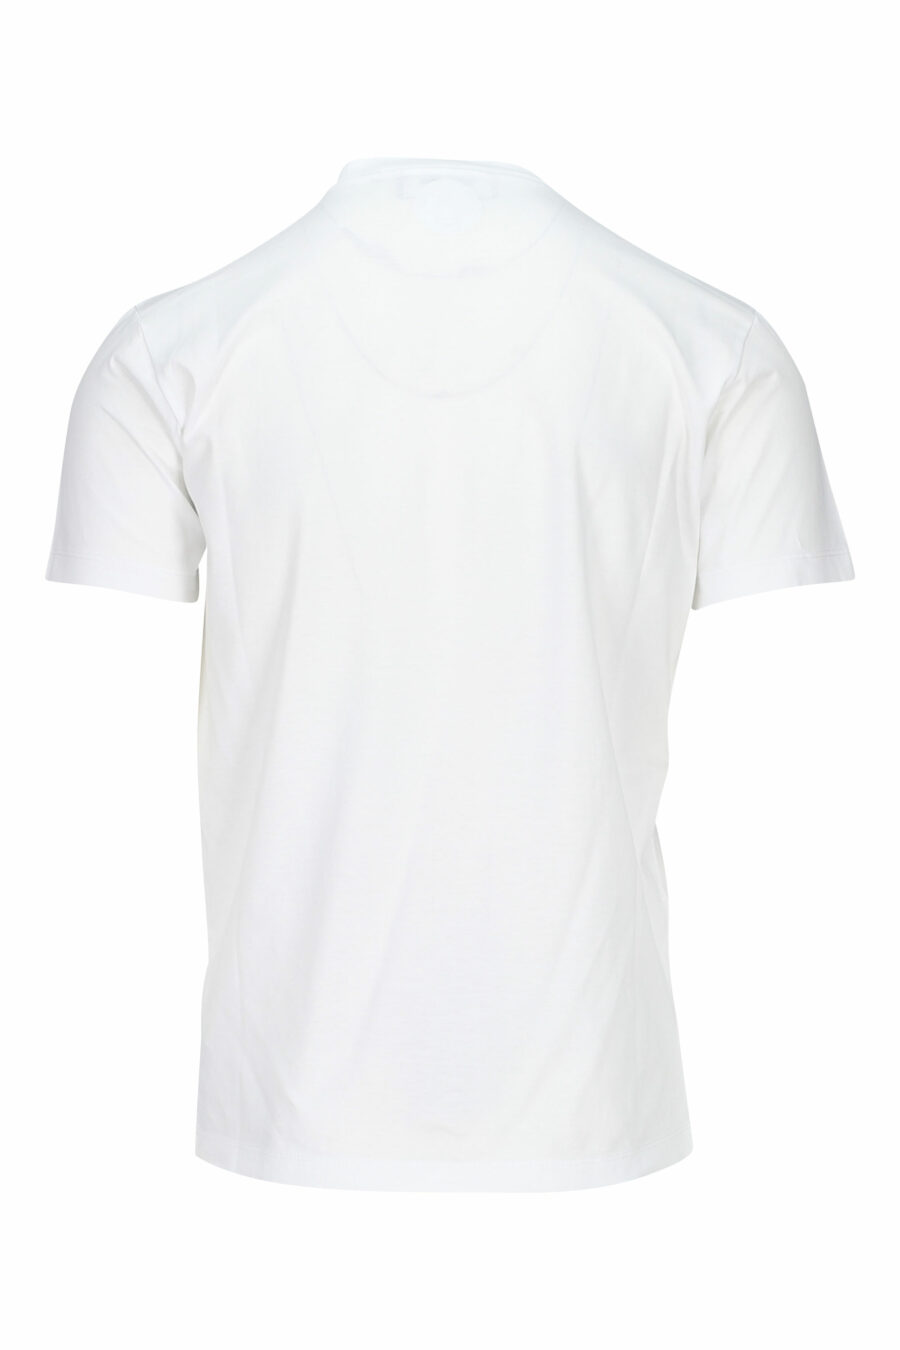 Camiseta blanca con maxilogo rgb - 8052134941089 1